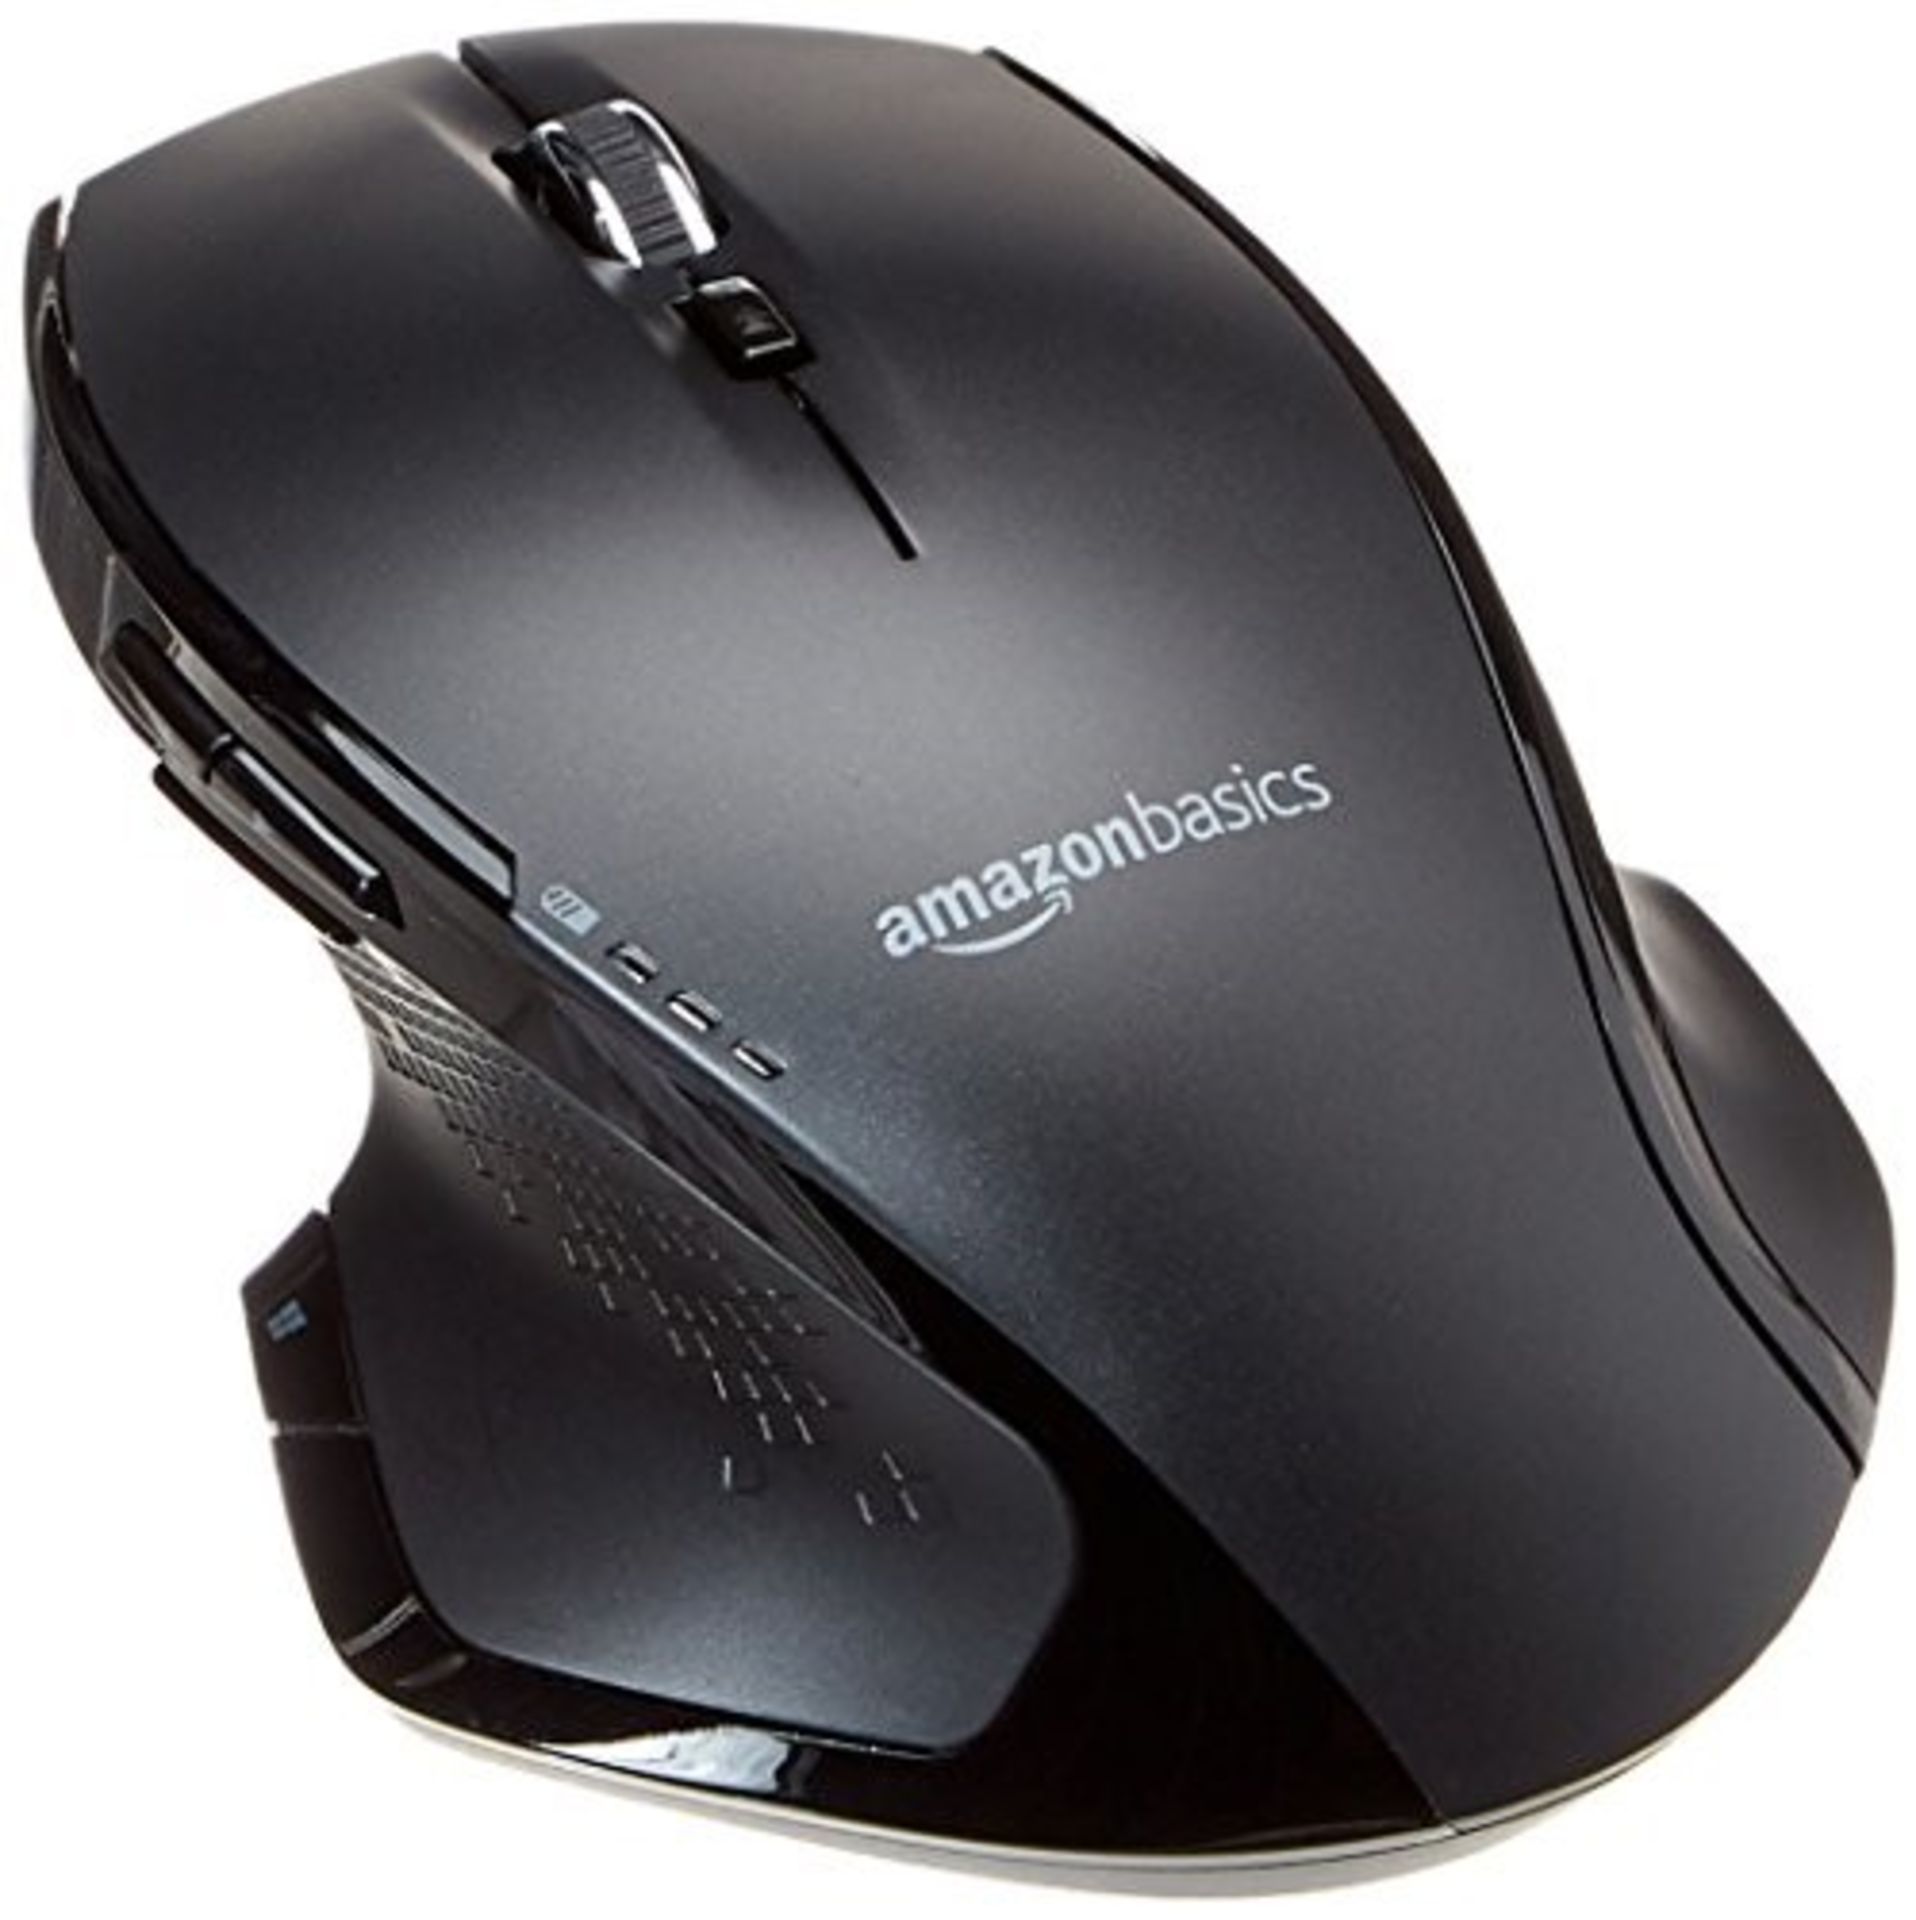 Amazon Basics Full-Size Ergonomic Wireless Mouse with Fast Scrolling